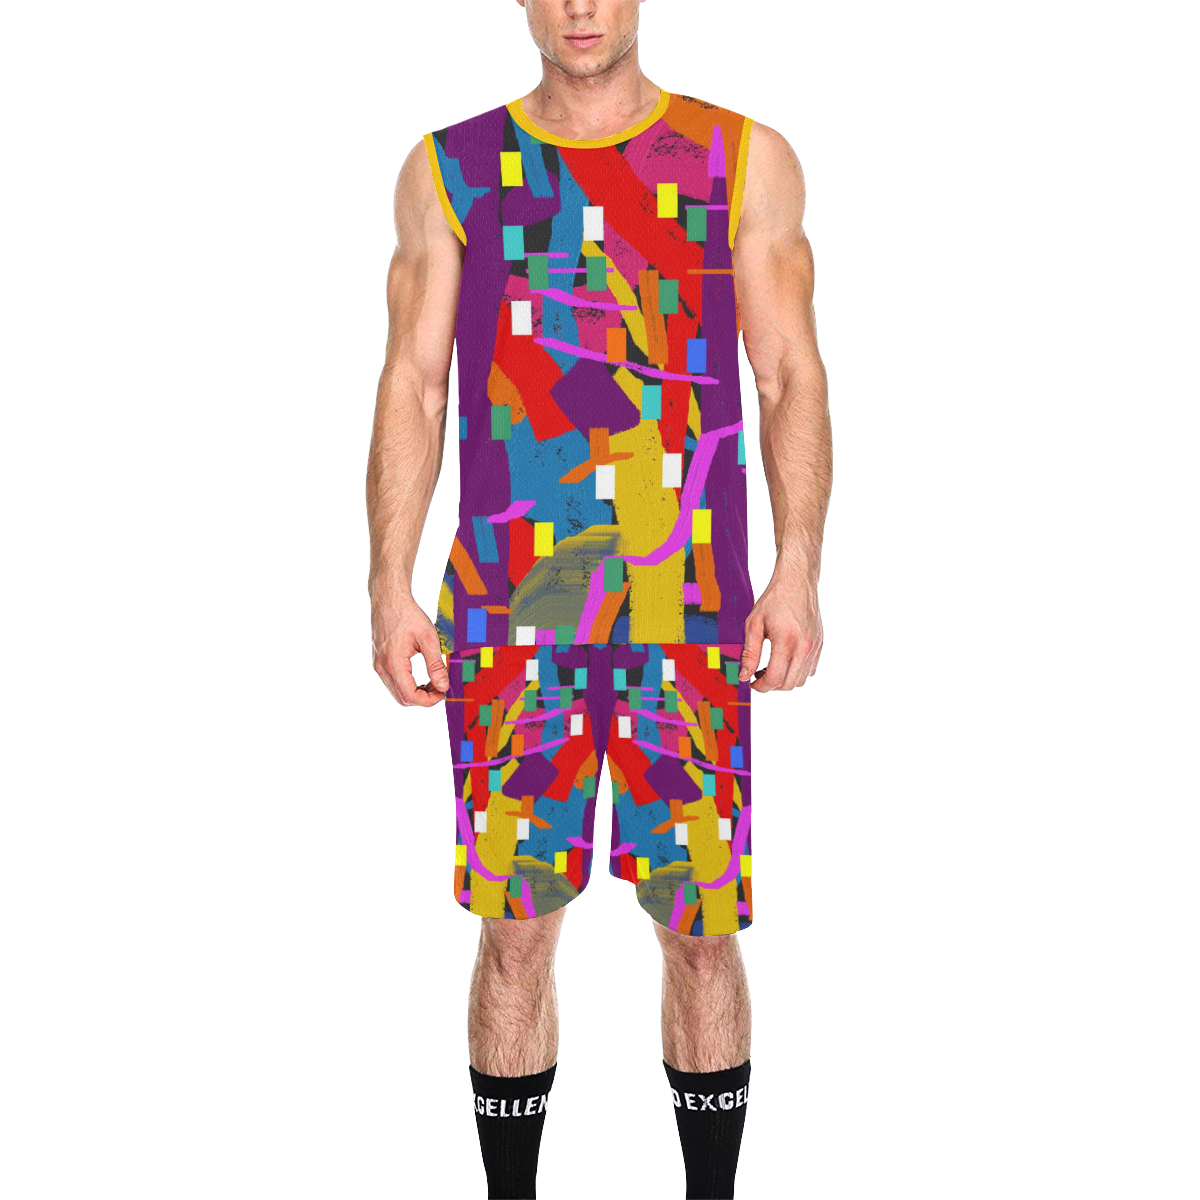 CONFETTI NIGHTS 2 All Over Print Basketball Uniform